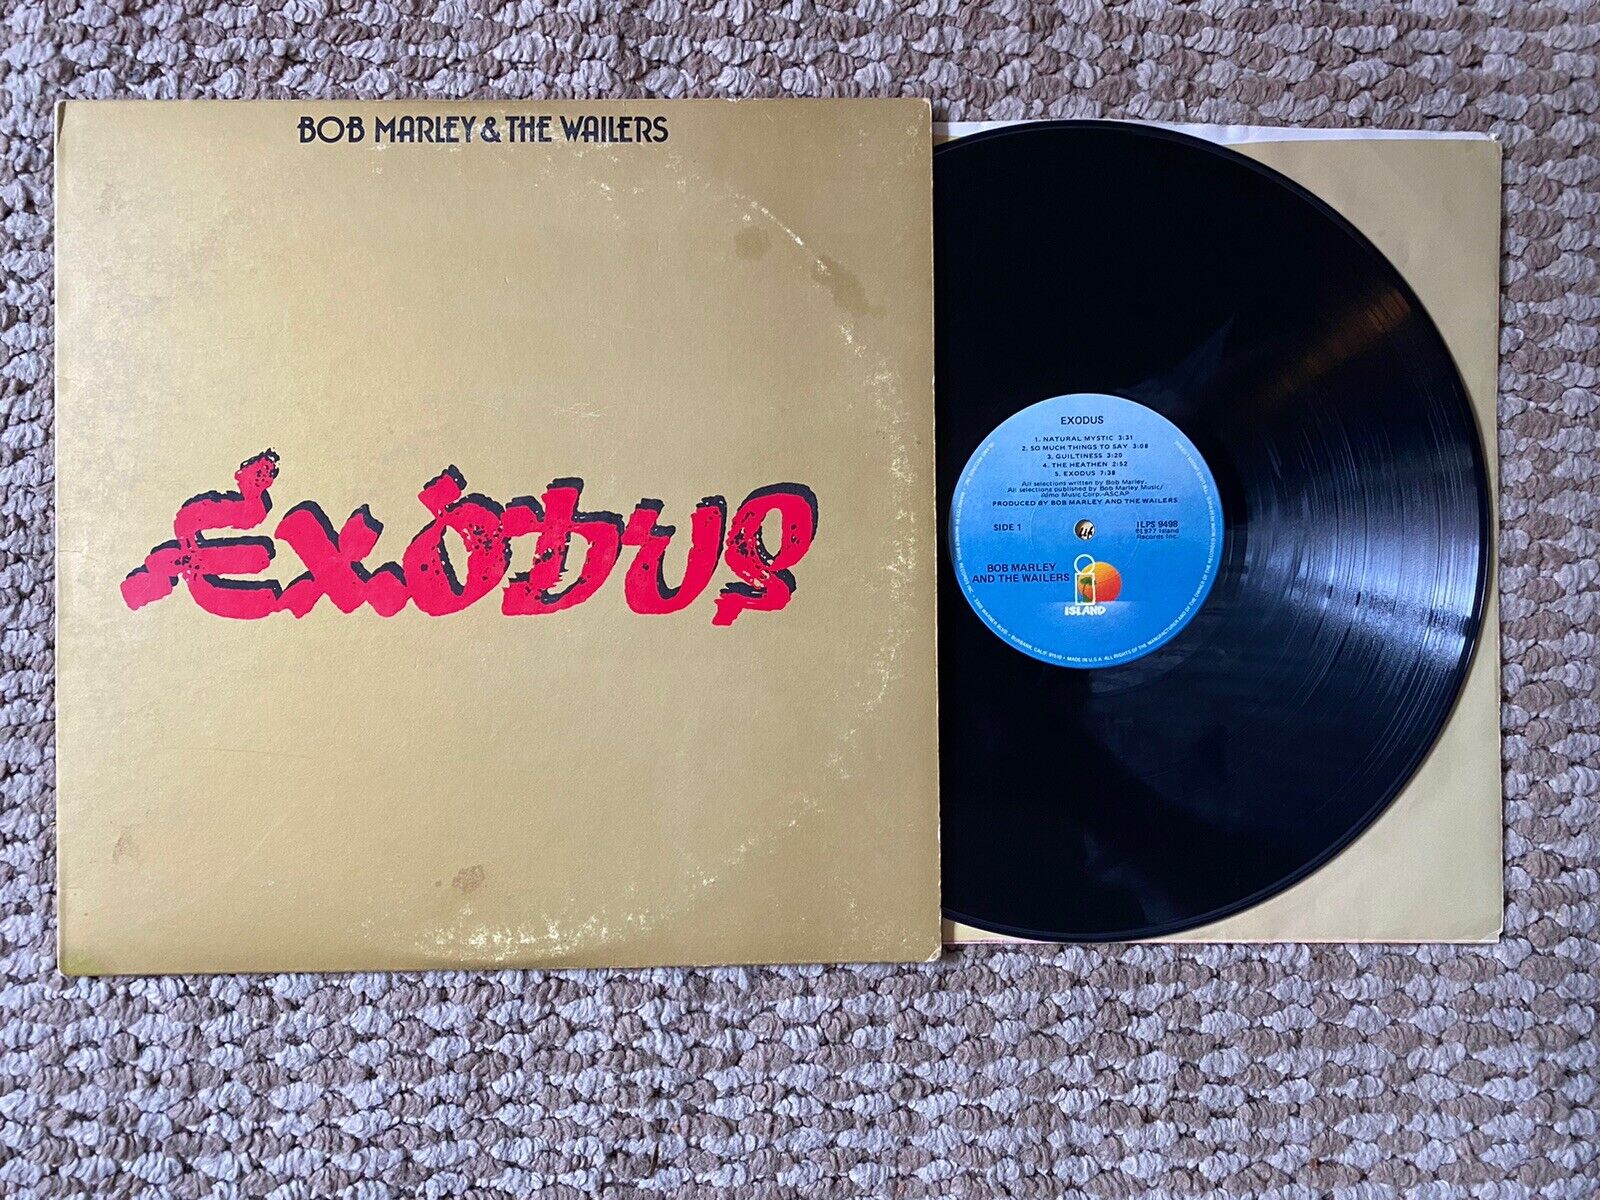 Bob Marley & The Wailers, “Exodus” LP 1978 Reissue Island ILDS 9498 VG-/VG+